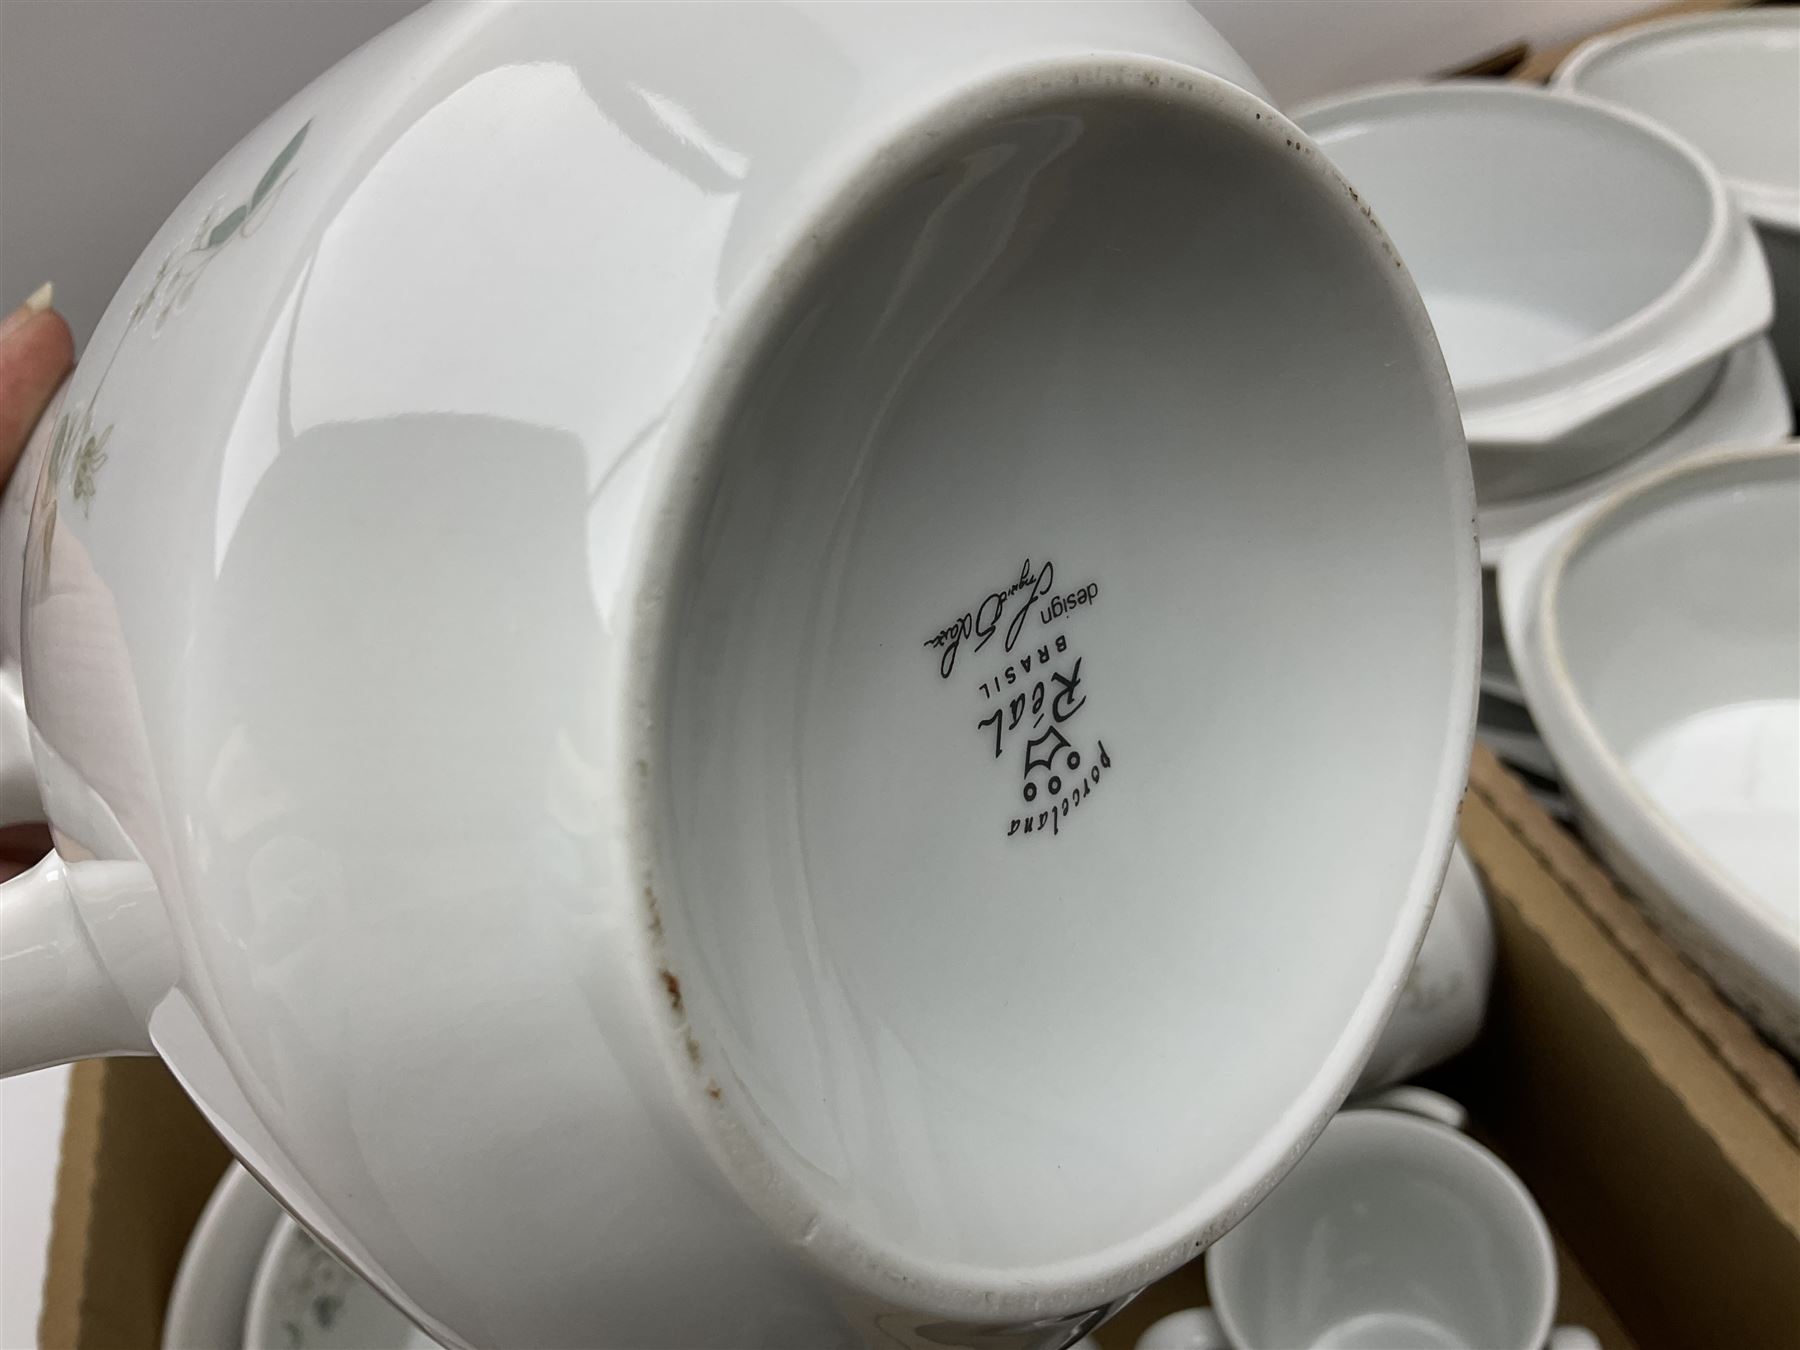 Porcelana Brasil: teacup tuesday - Porcelana Real